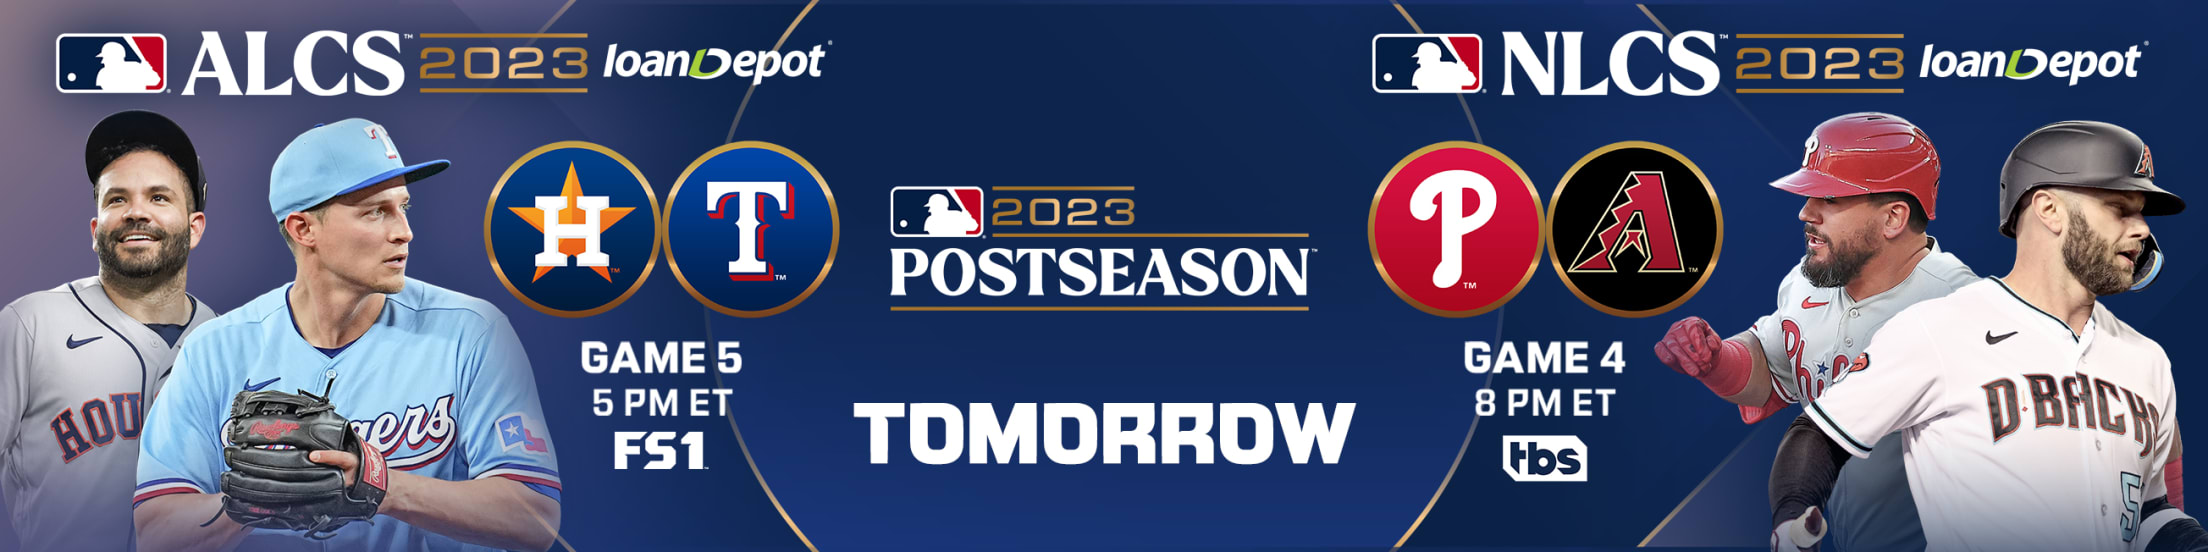 Phillies playoff gear: How to get Phillies 2022 MLB Postseason gear online